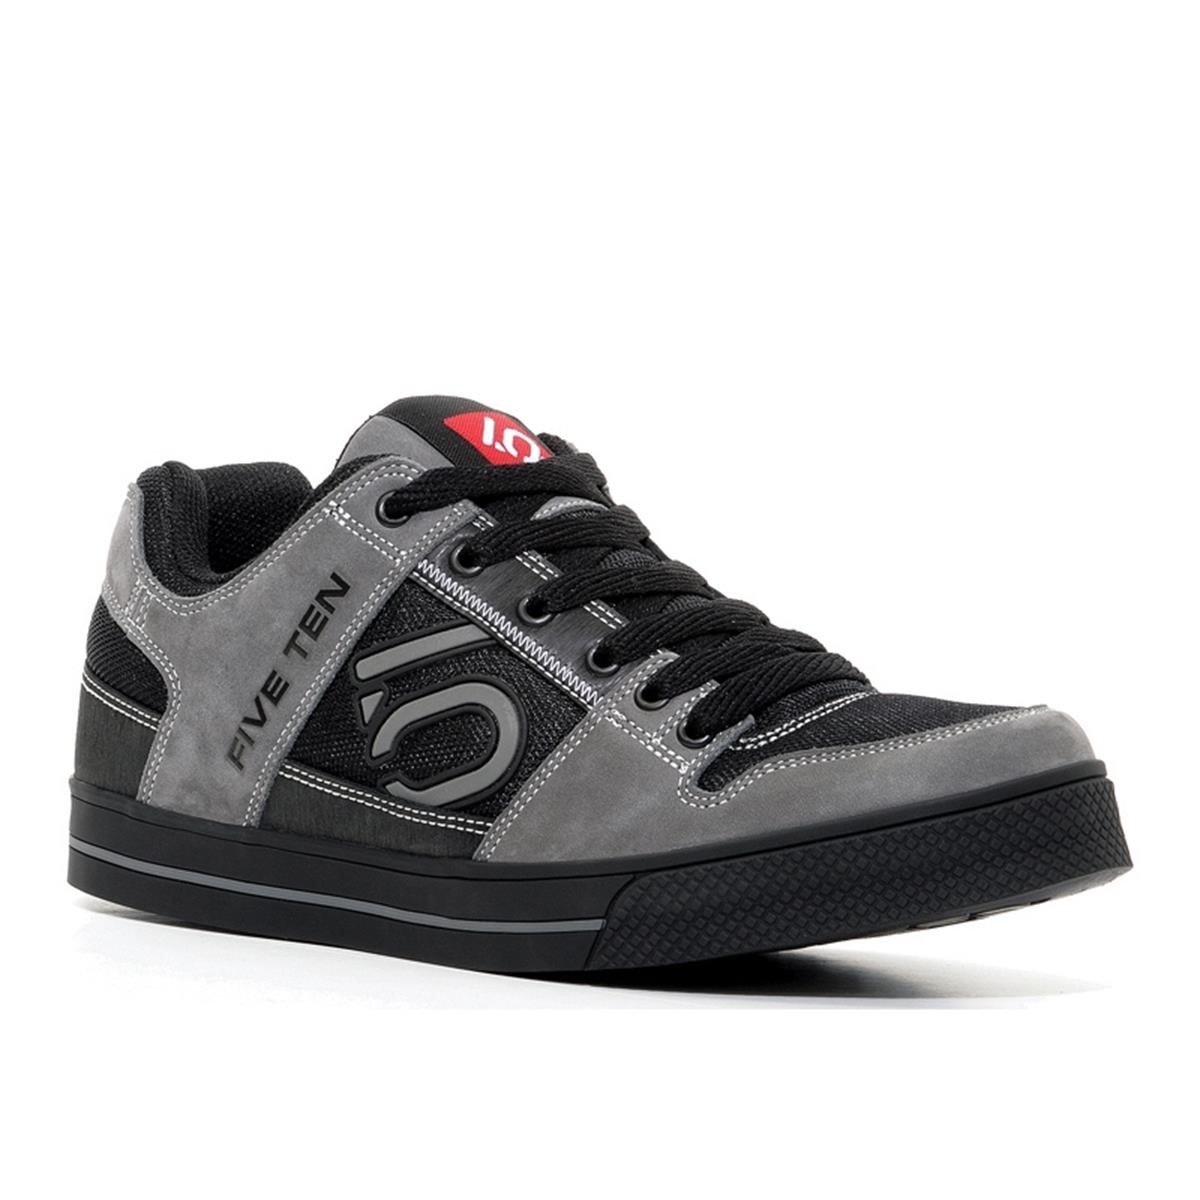 Freizeit/Streetwear Bekleidung-Schuhe - Five Ten Schuhe Freerider Black/Grey